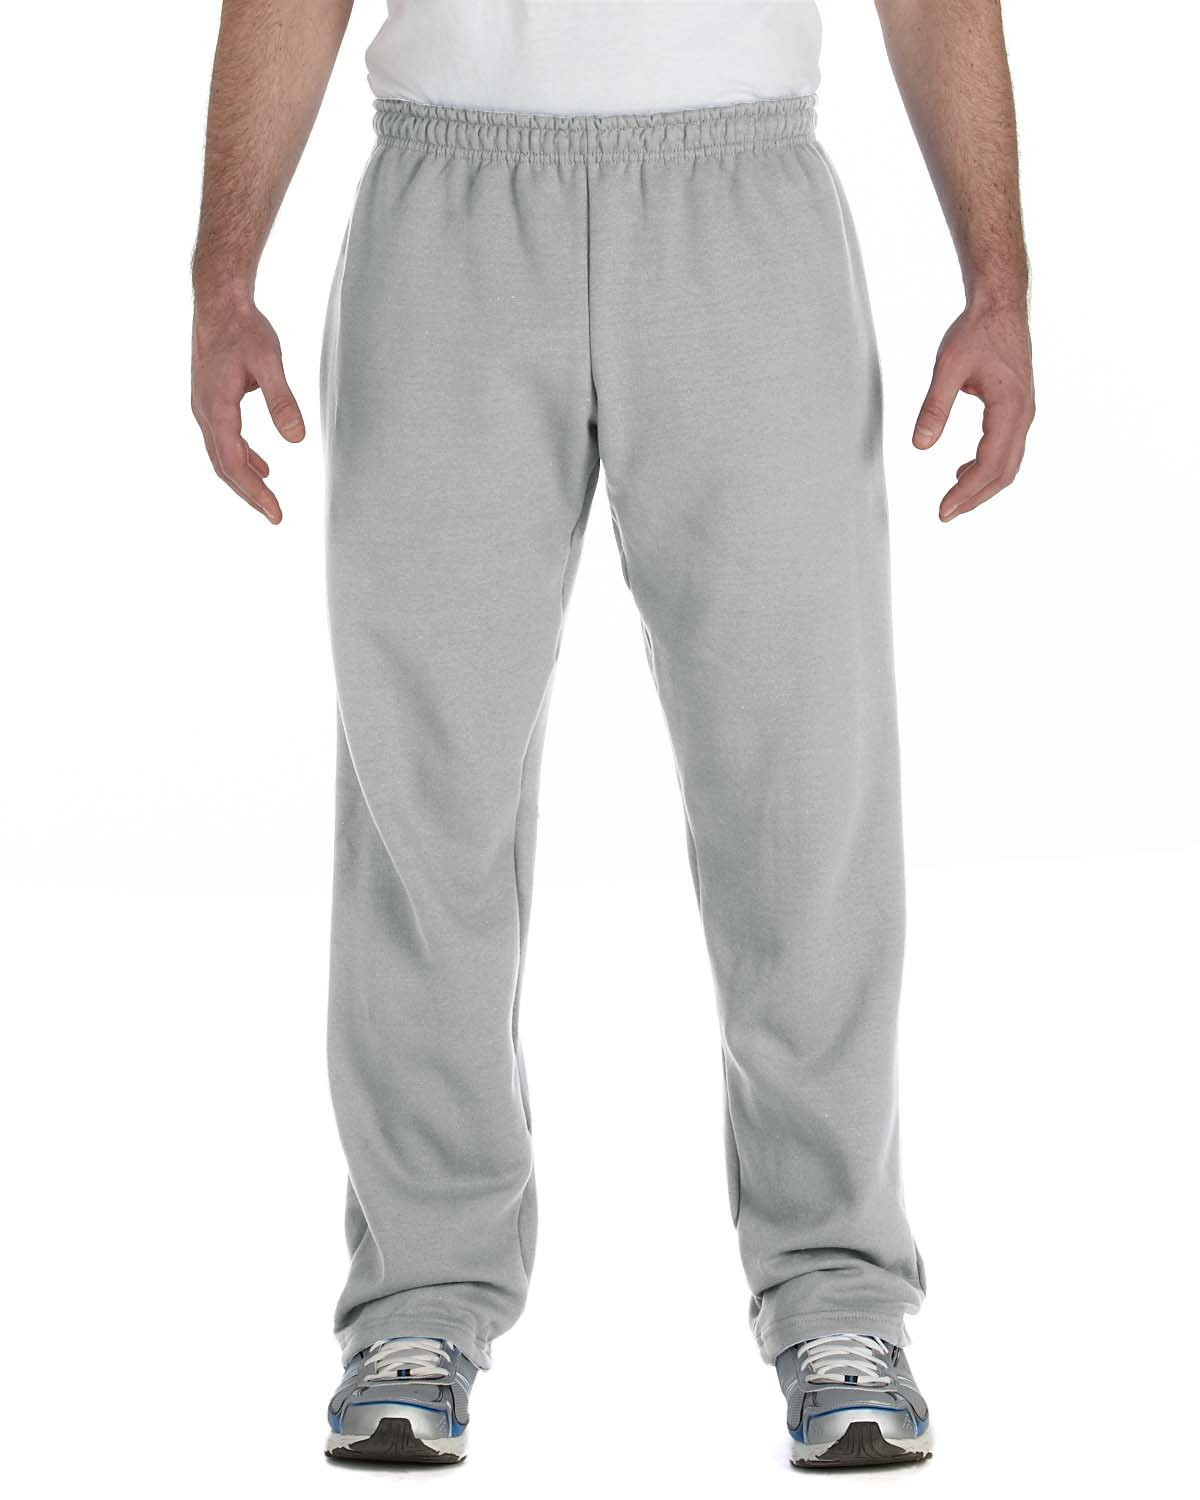 18 Pieces Adult Unisex Gildan Ash Grey Adult Sweatpants,size Small